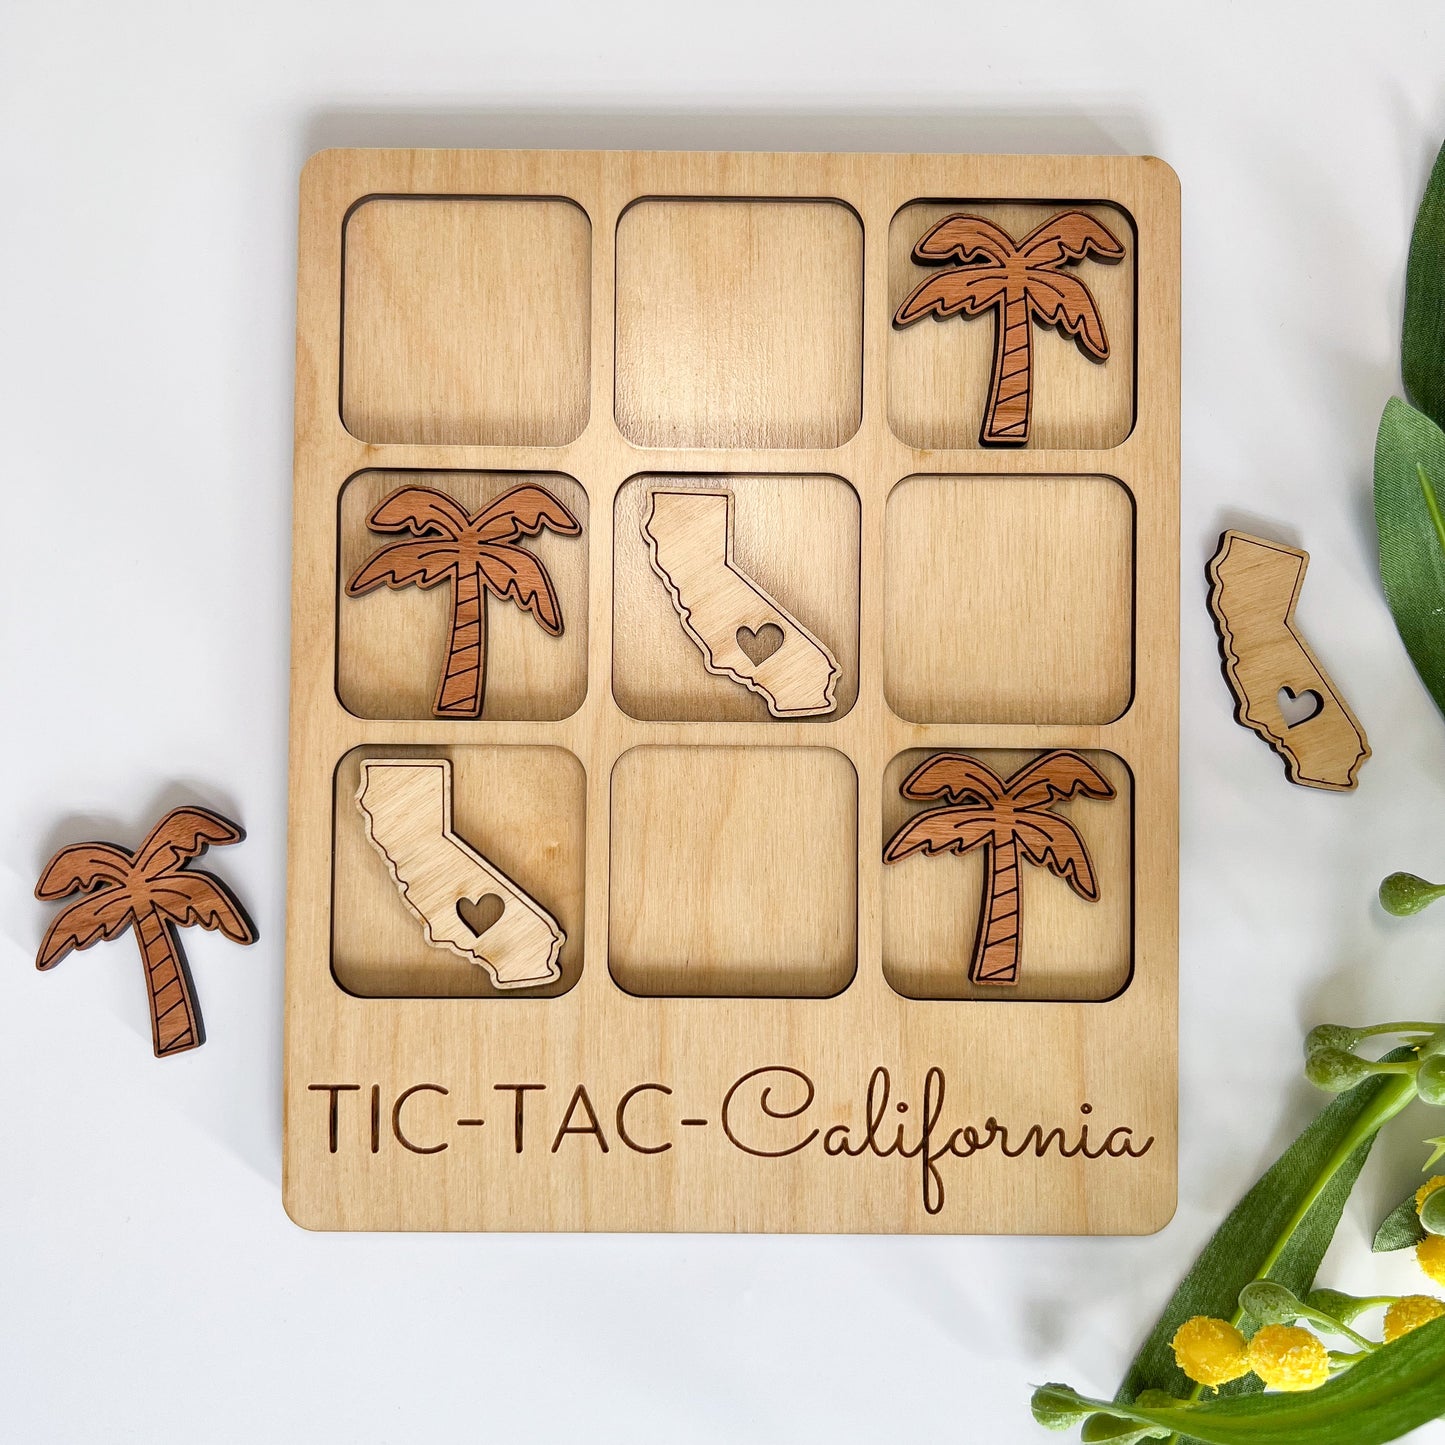 California Tic-Tac-Toe Board